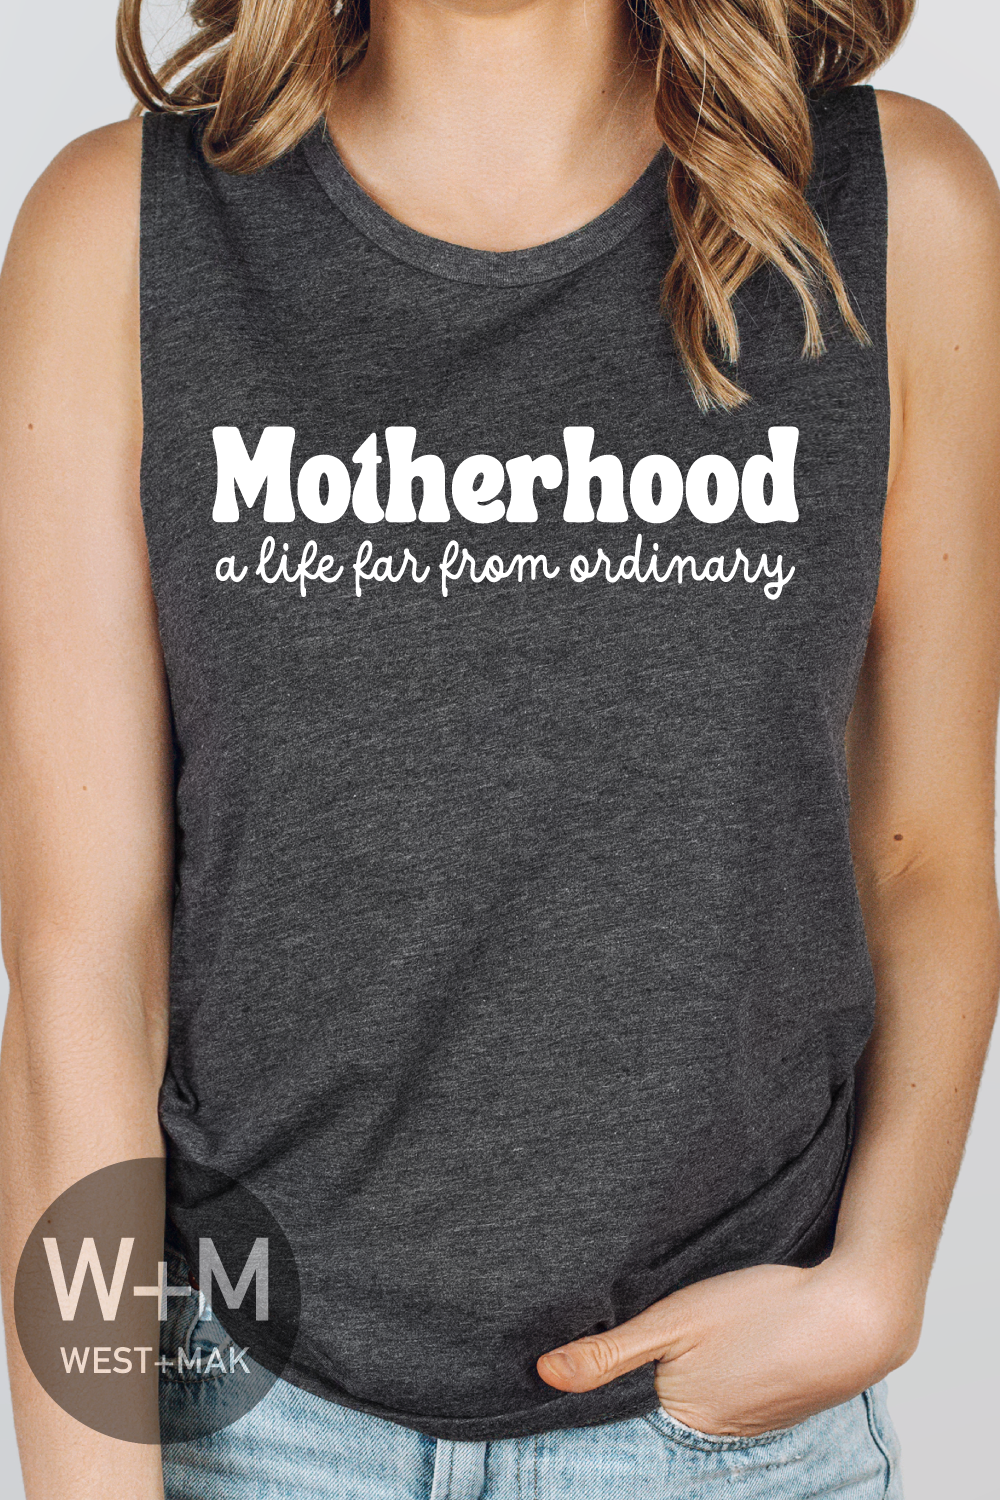 Motherhood Life Far from Ordinary - Women's Muscle Tank